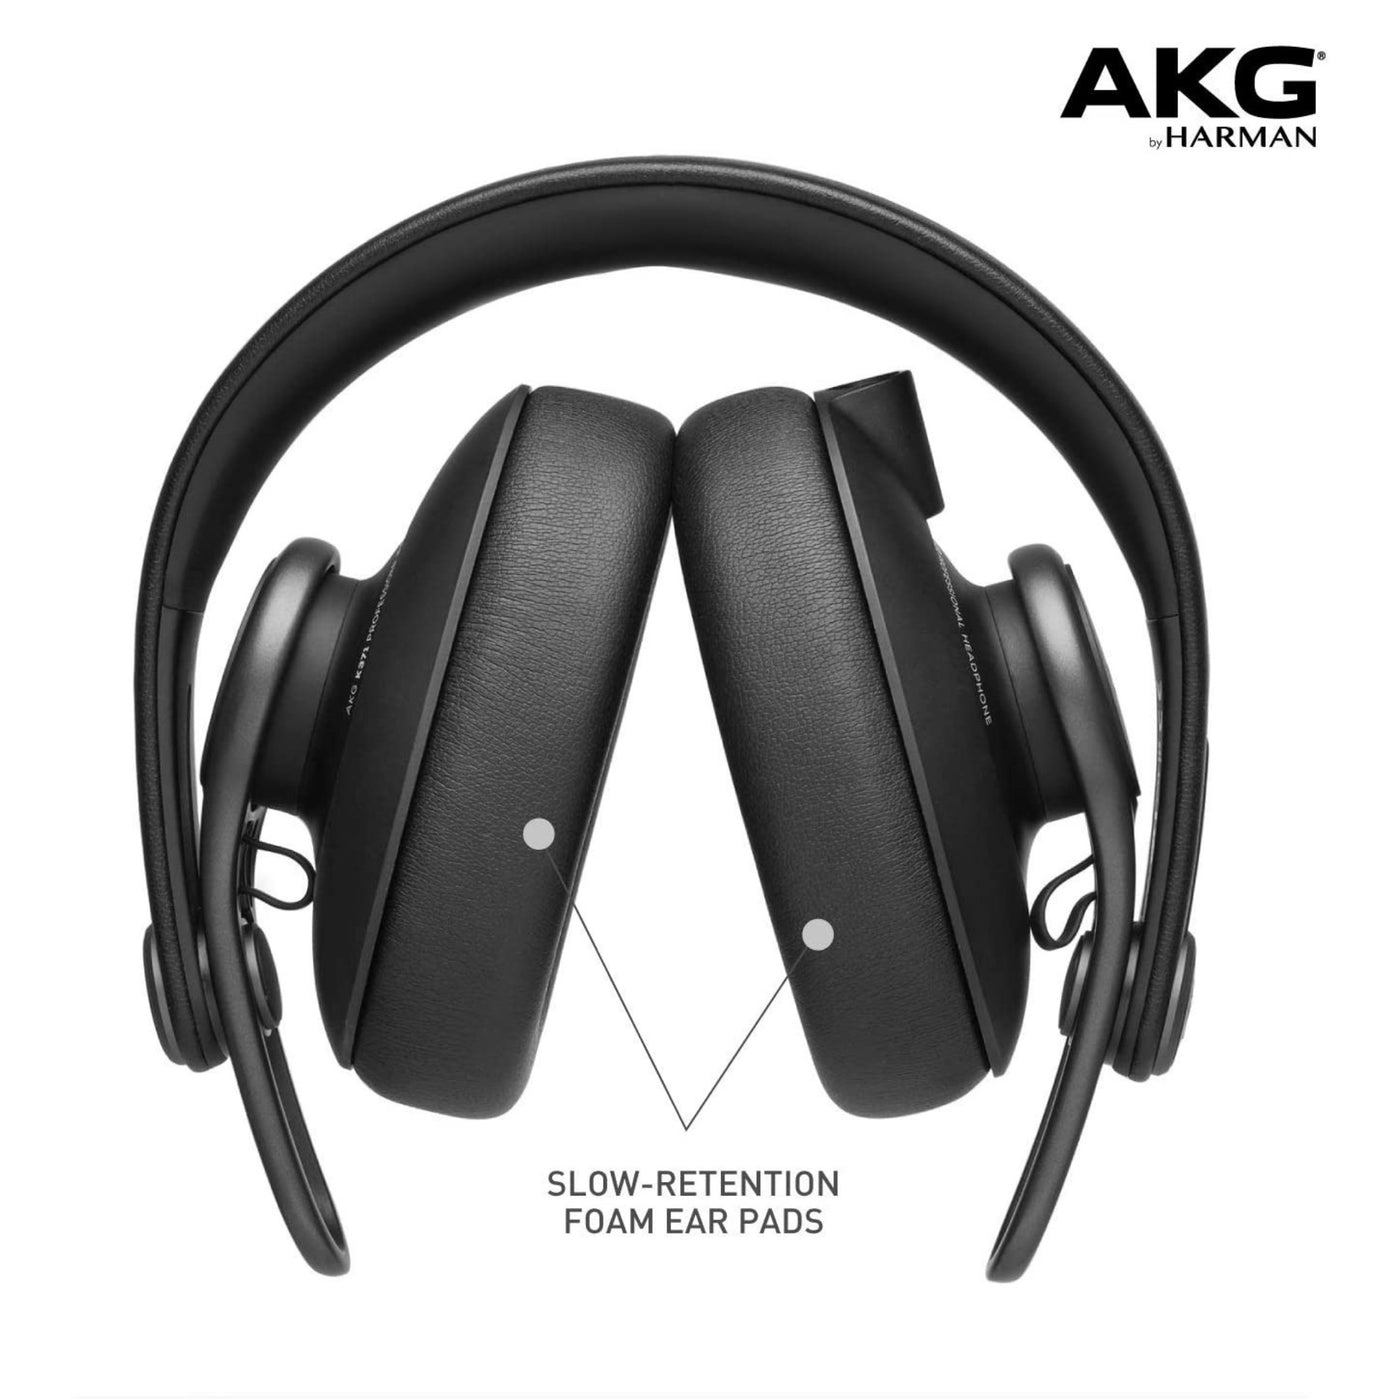 K361 Over-Ear, Closed-back, Foldable Studio Headphones